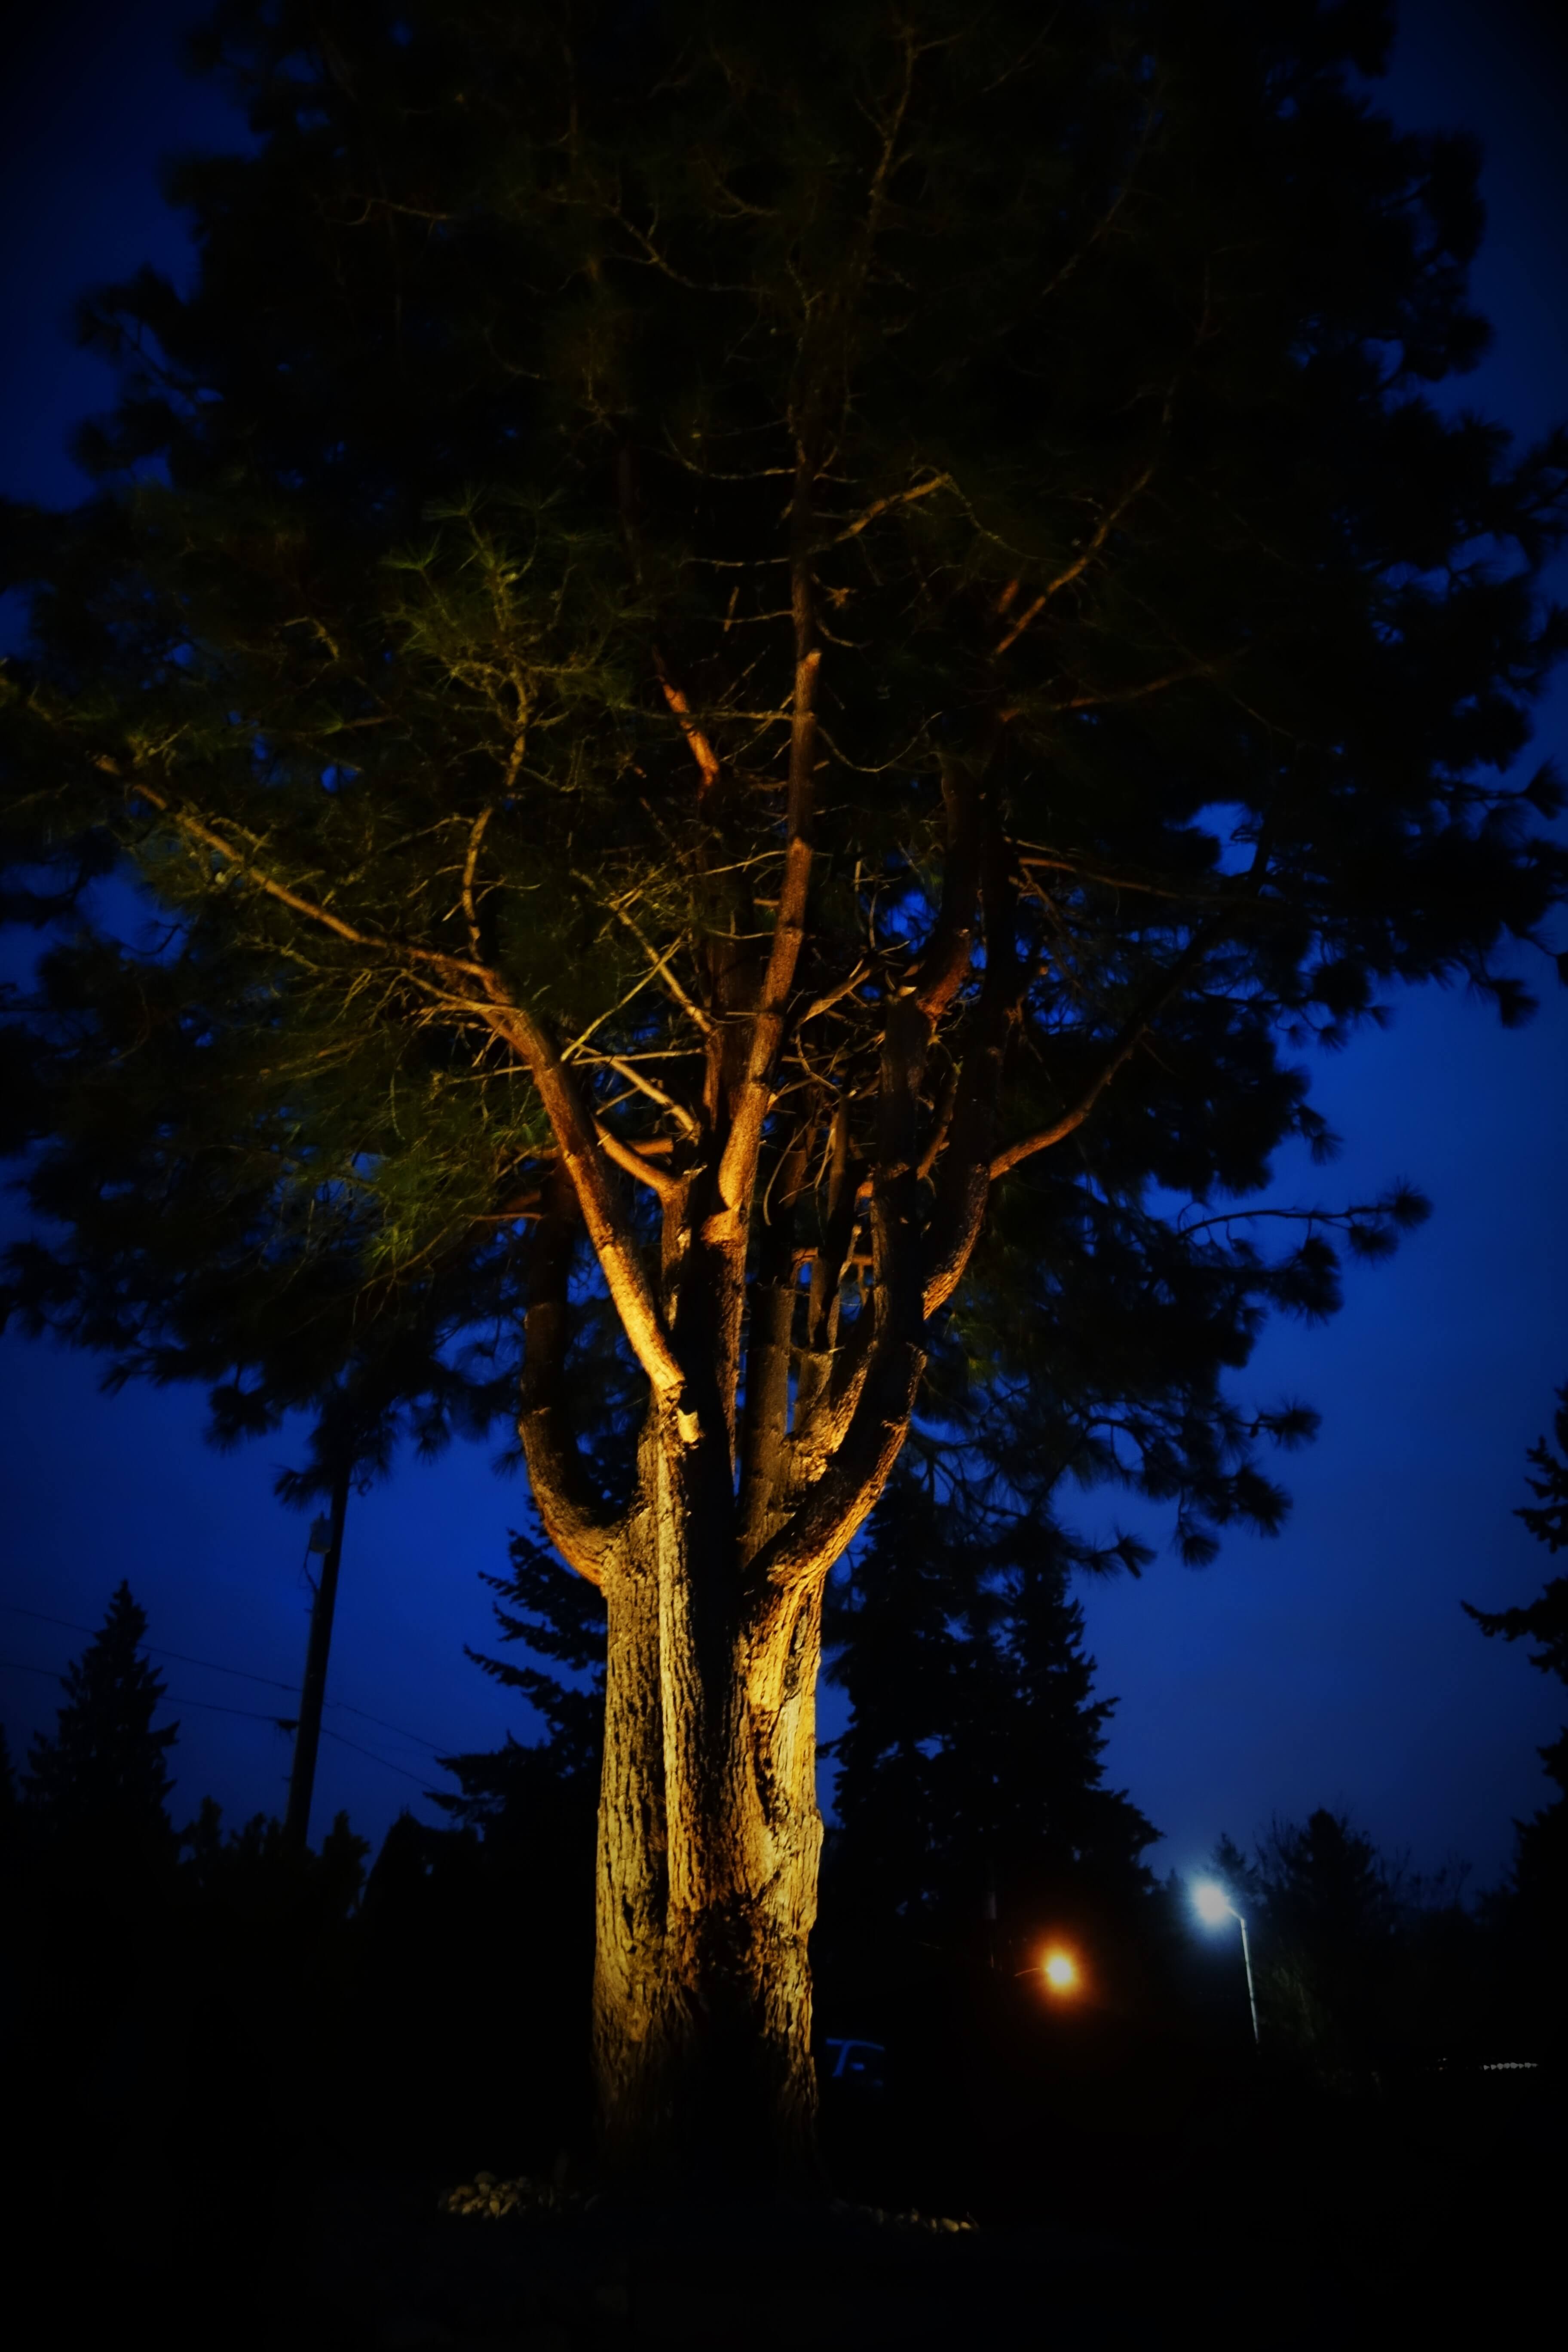 Huge pine tree with uplighting